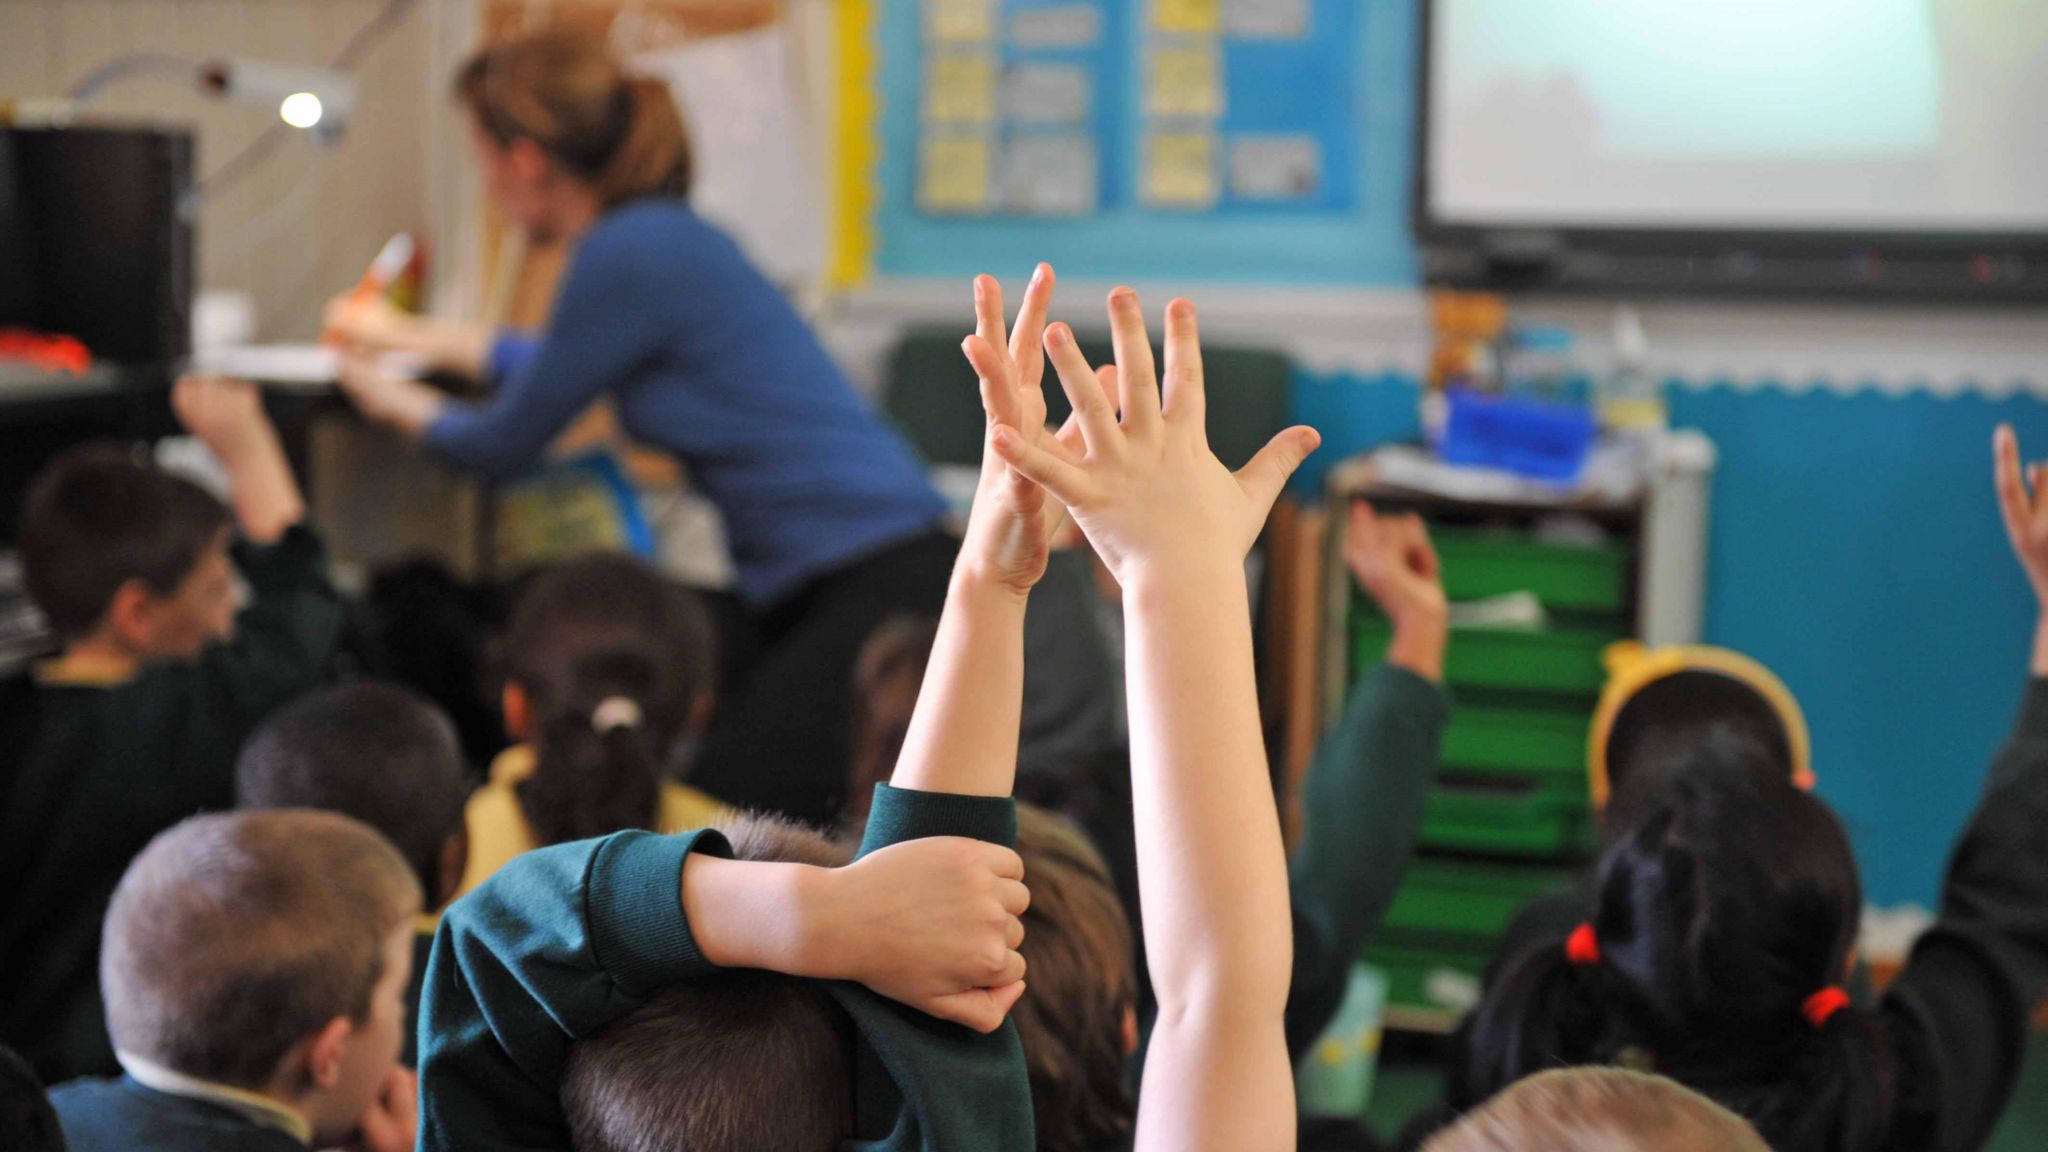 Children raise their hands in school class